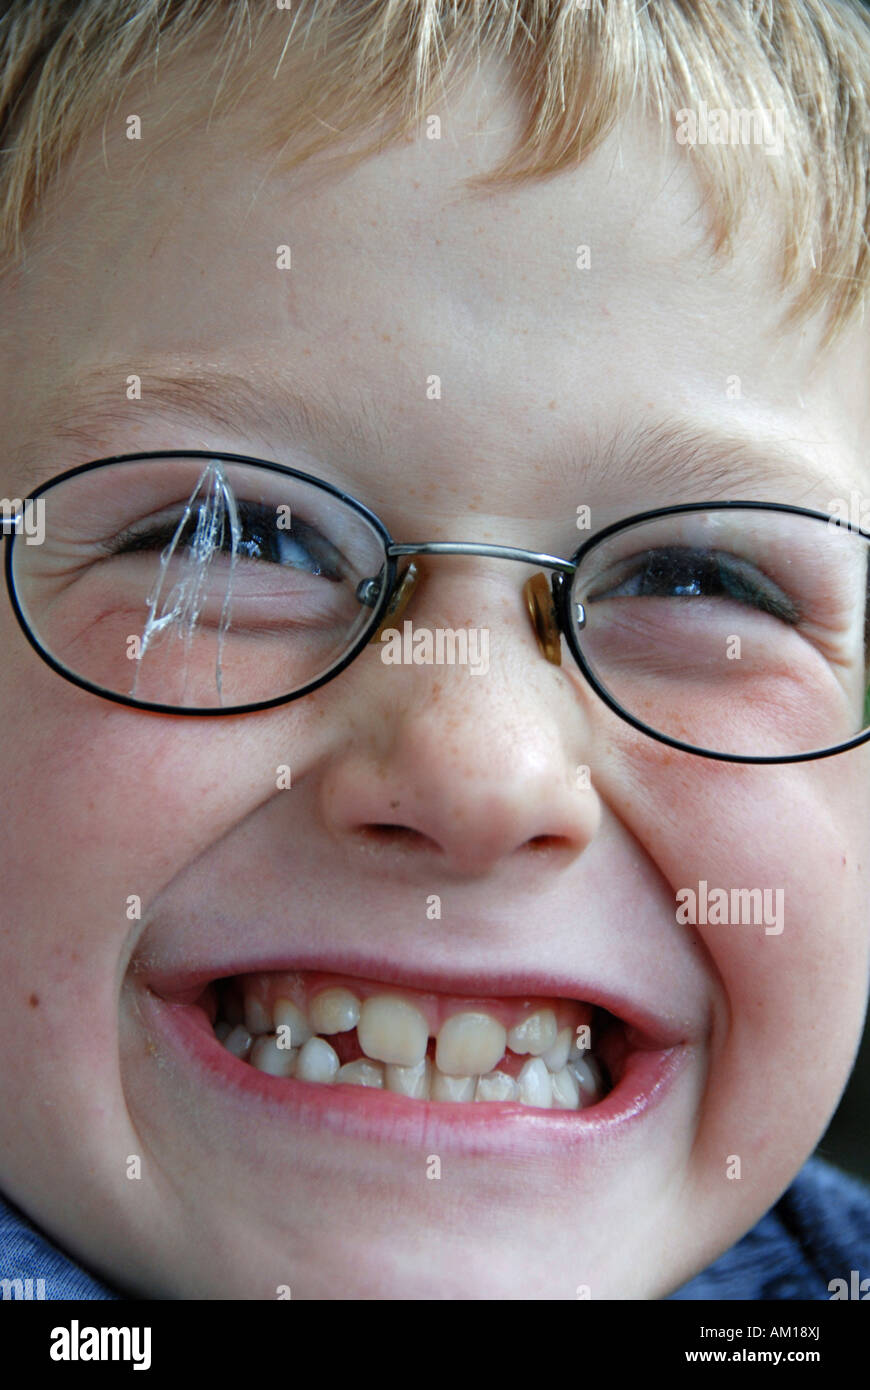 Boy with broken glasses Stock Photo